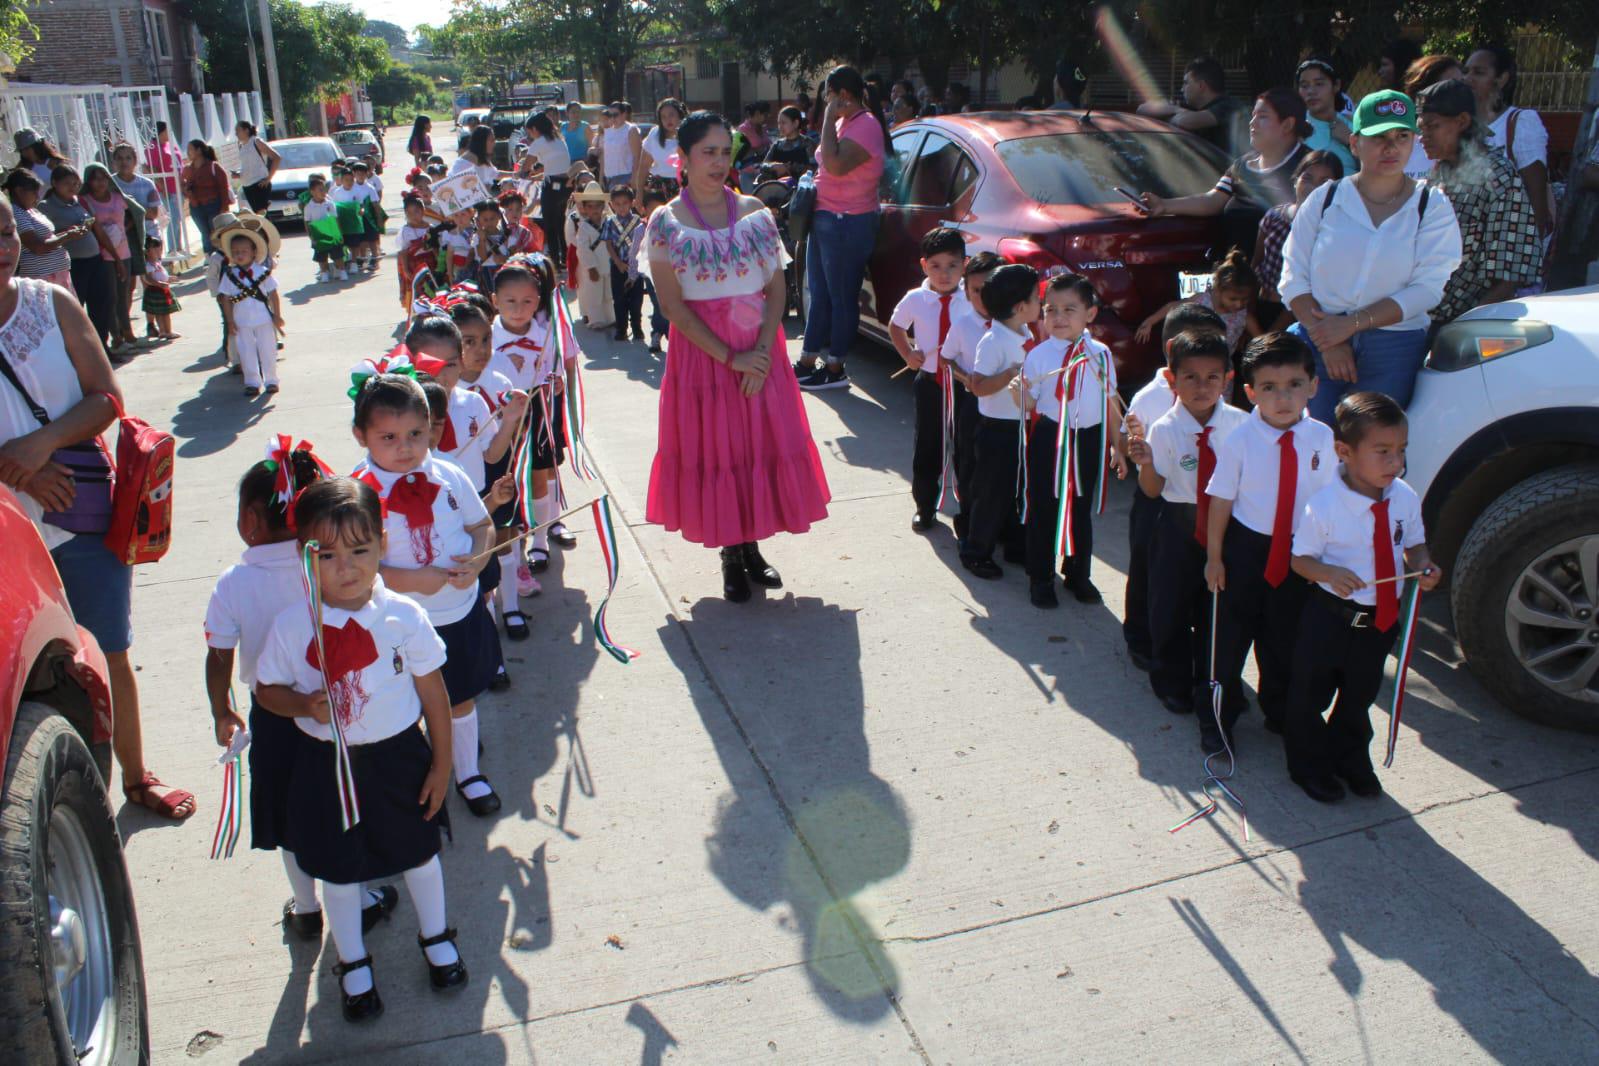 $!Adelantan preescolares desfile revolucionario en Rosario